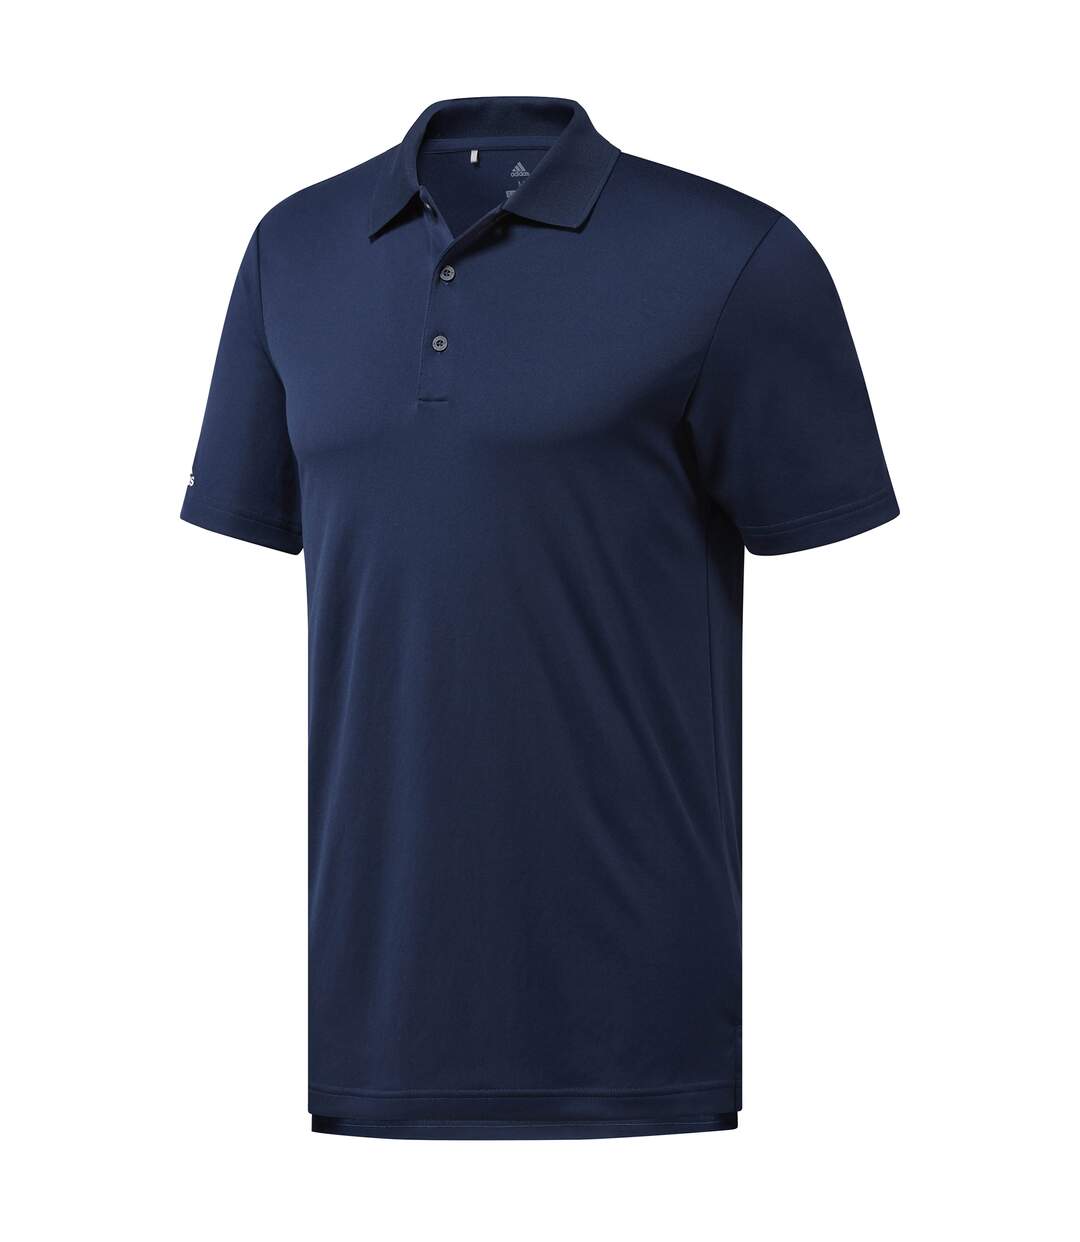 Adidas Mens Performance Polo Shirt (Collegiate Navy)